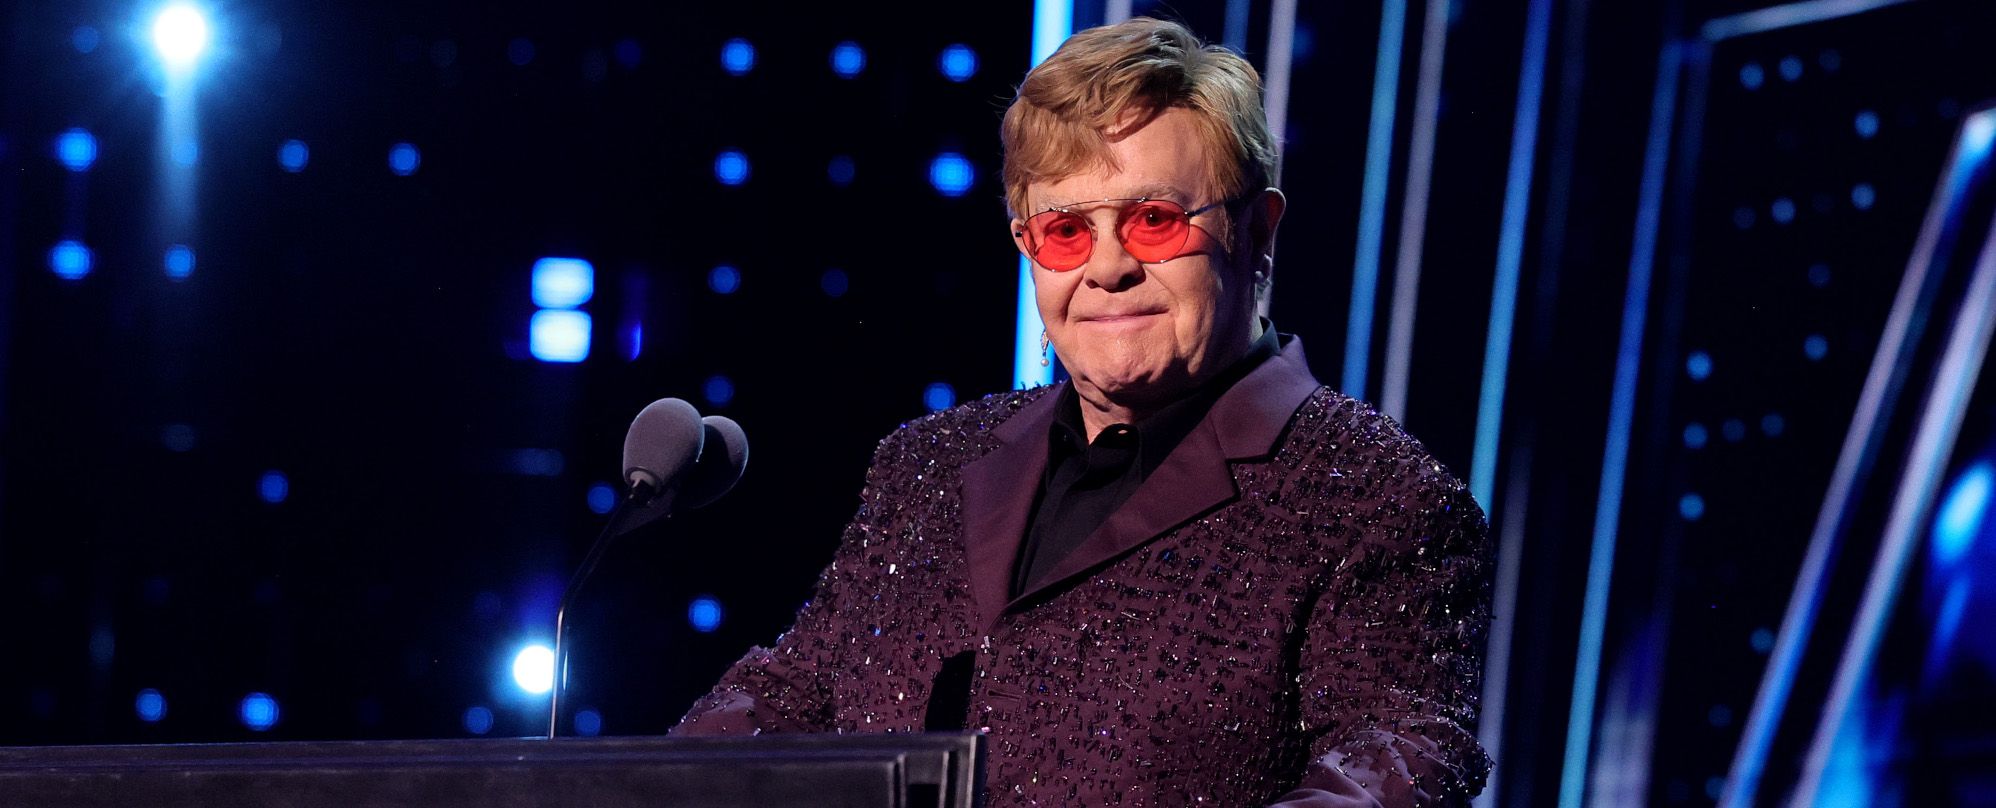 Elton John Becomes Latest Member of the EGOT Club